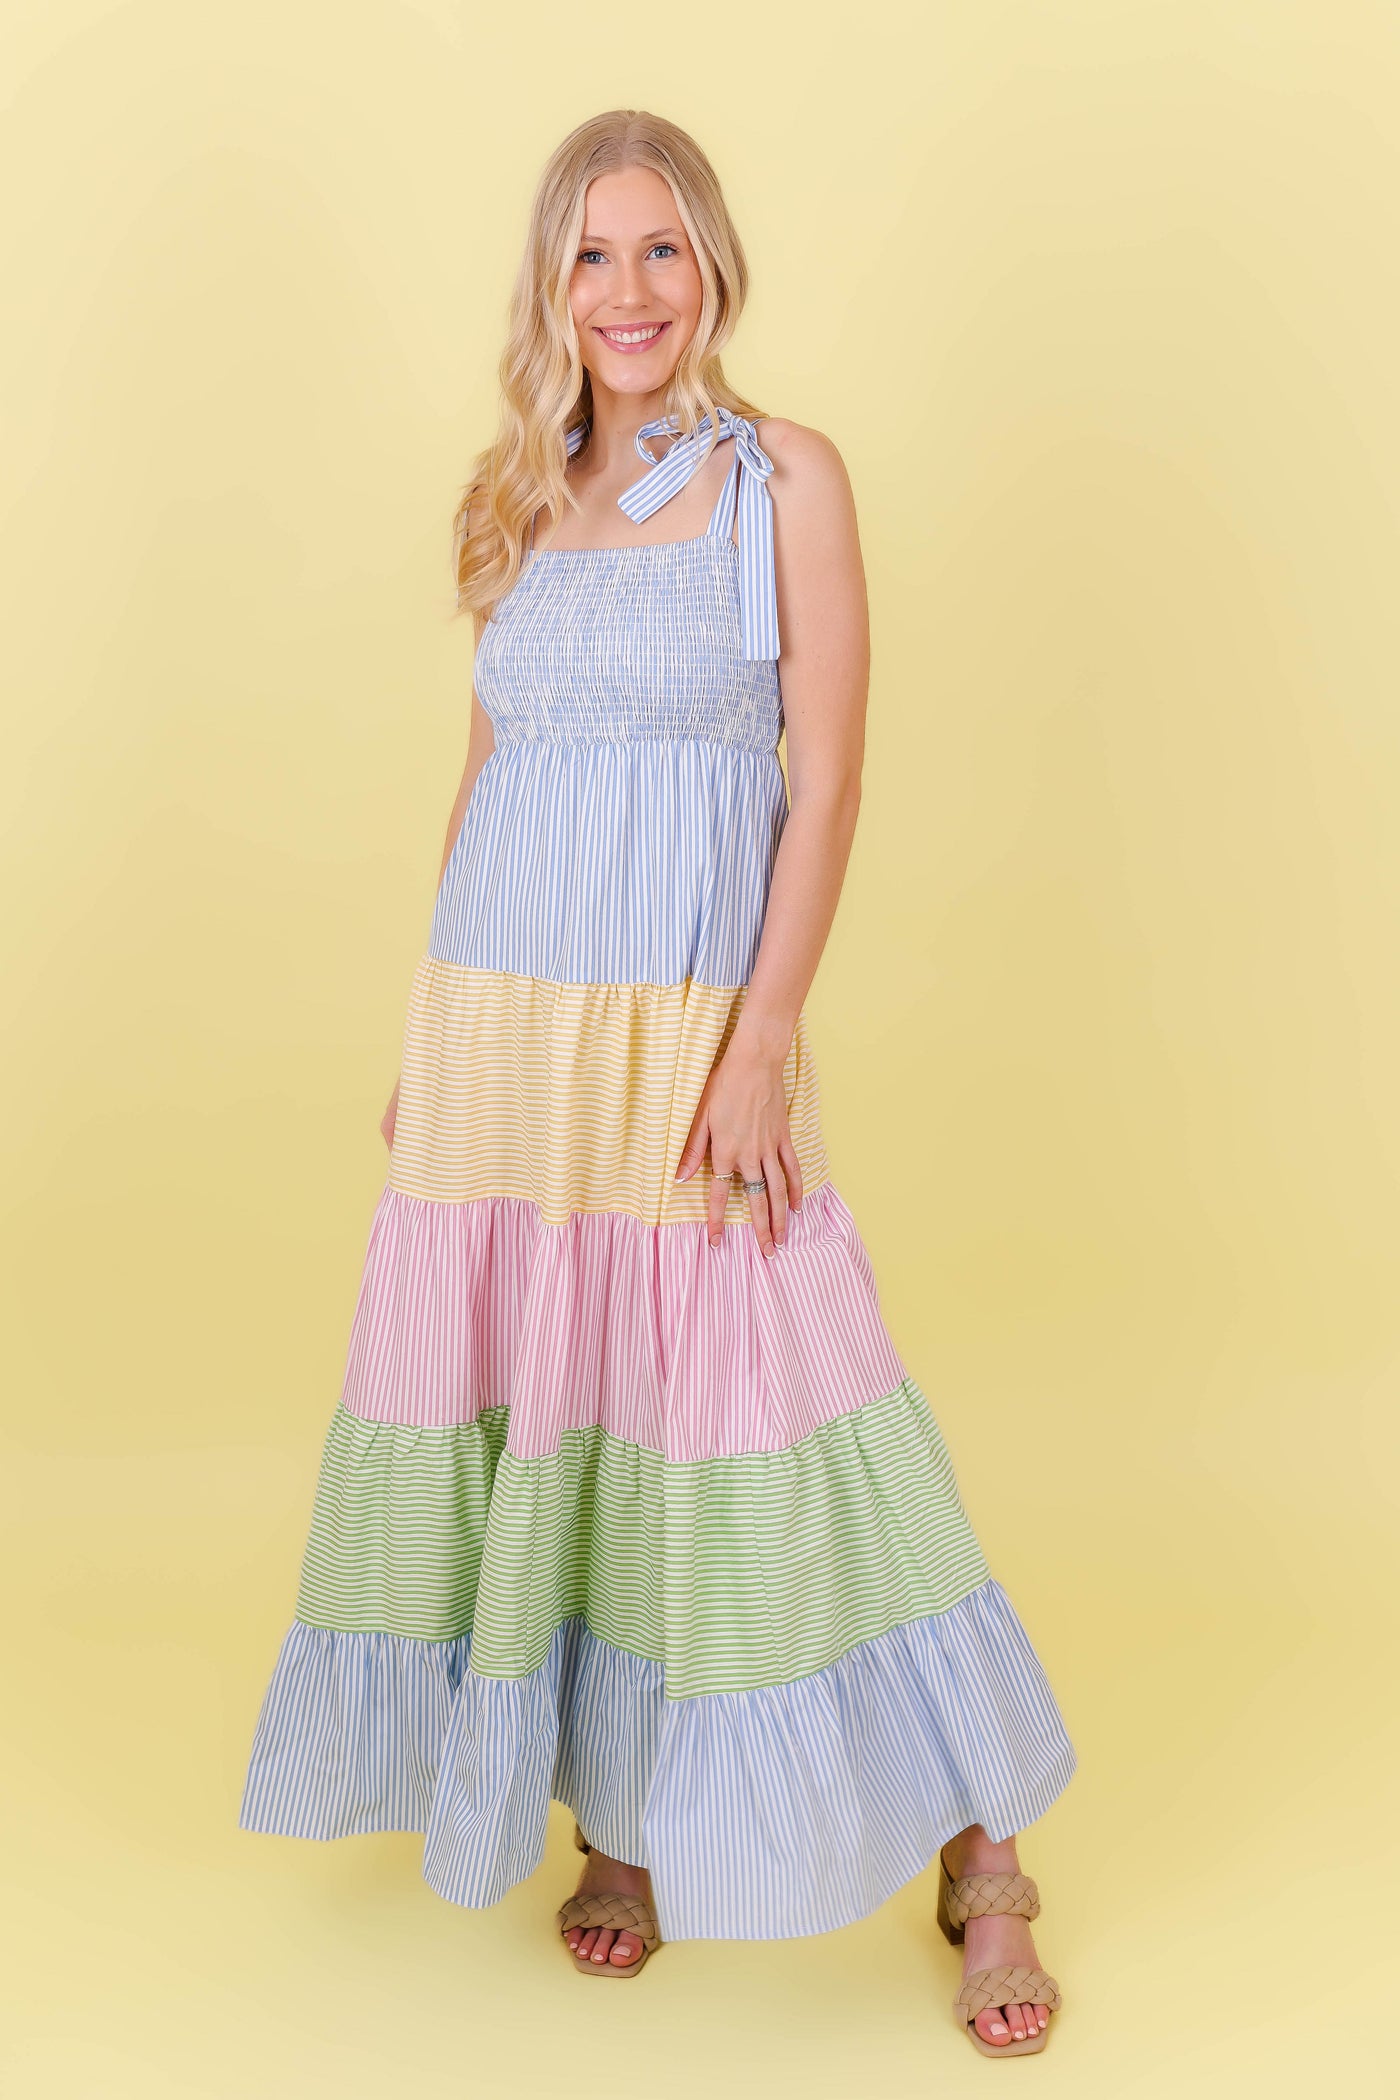 Pastel Maxi Dress- Striped Colorblock Maxi- &Merci Maxi Dress